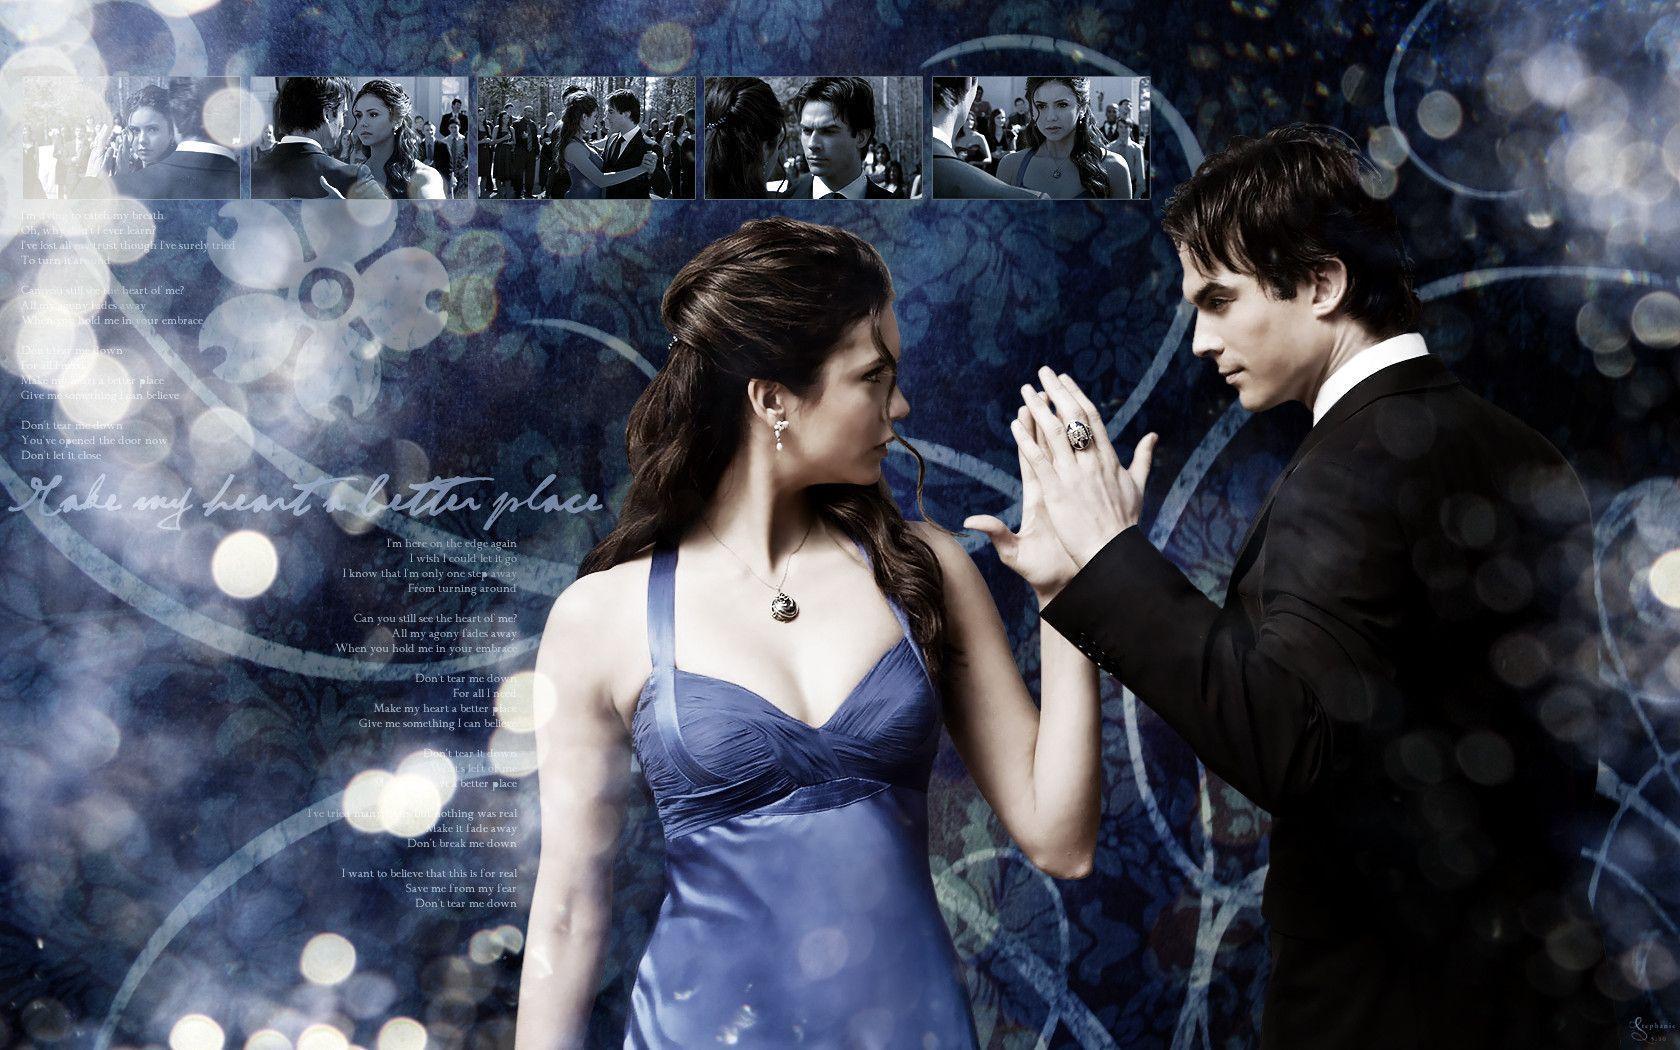 New Vampire Diaries Wallpaper: Damon or Stefan?